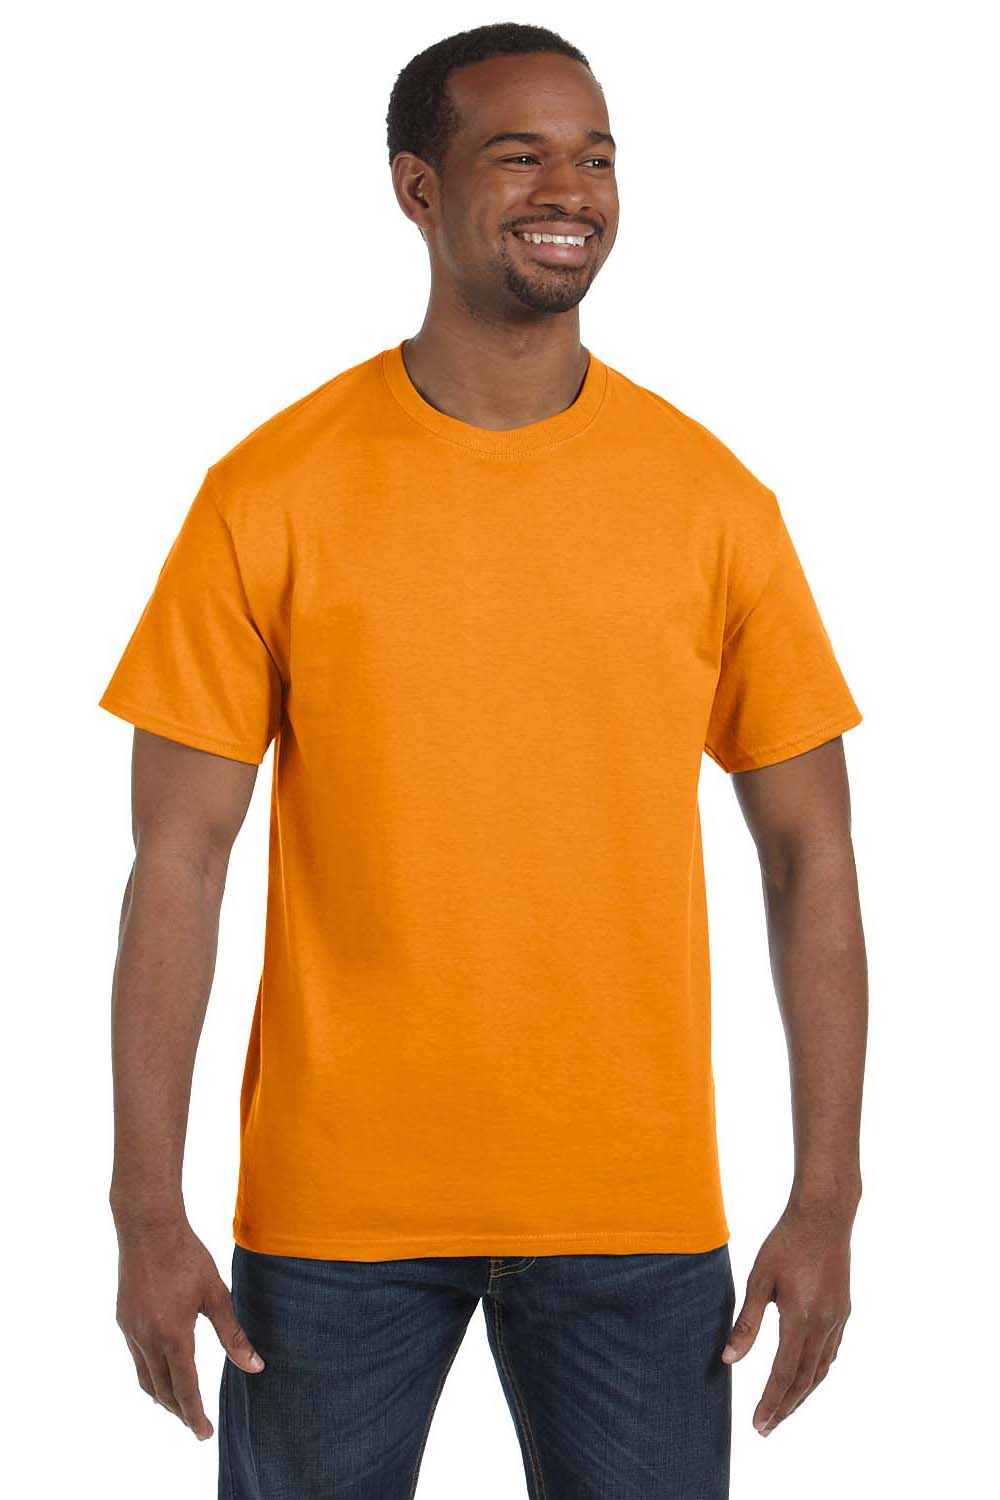 Hanes 5250T Mens ComfortSoft Short Sleeve Crewneck T-Shirt Safety Orange Front